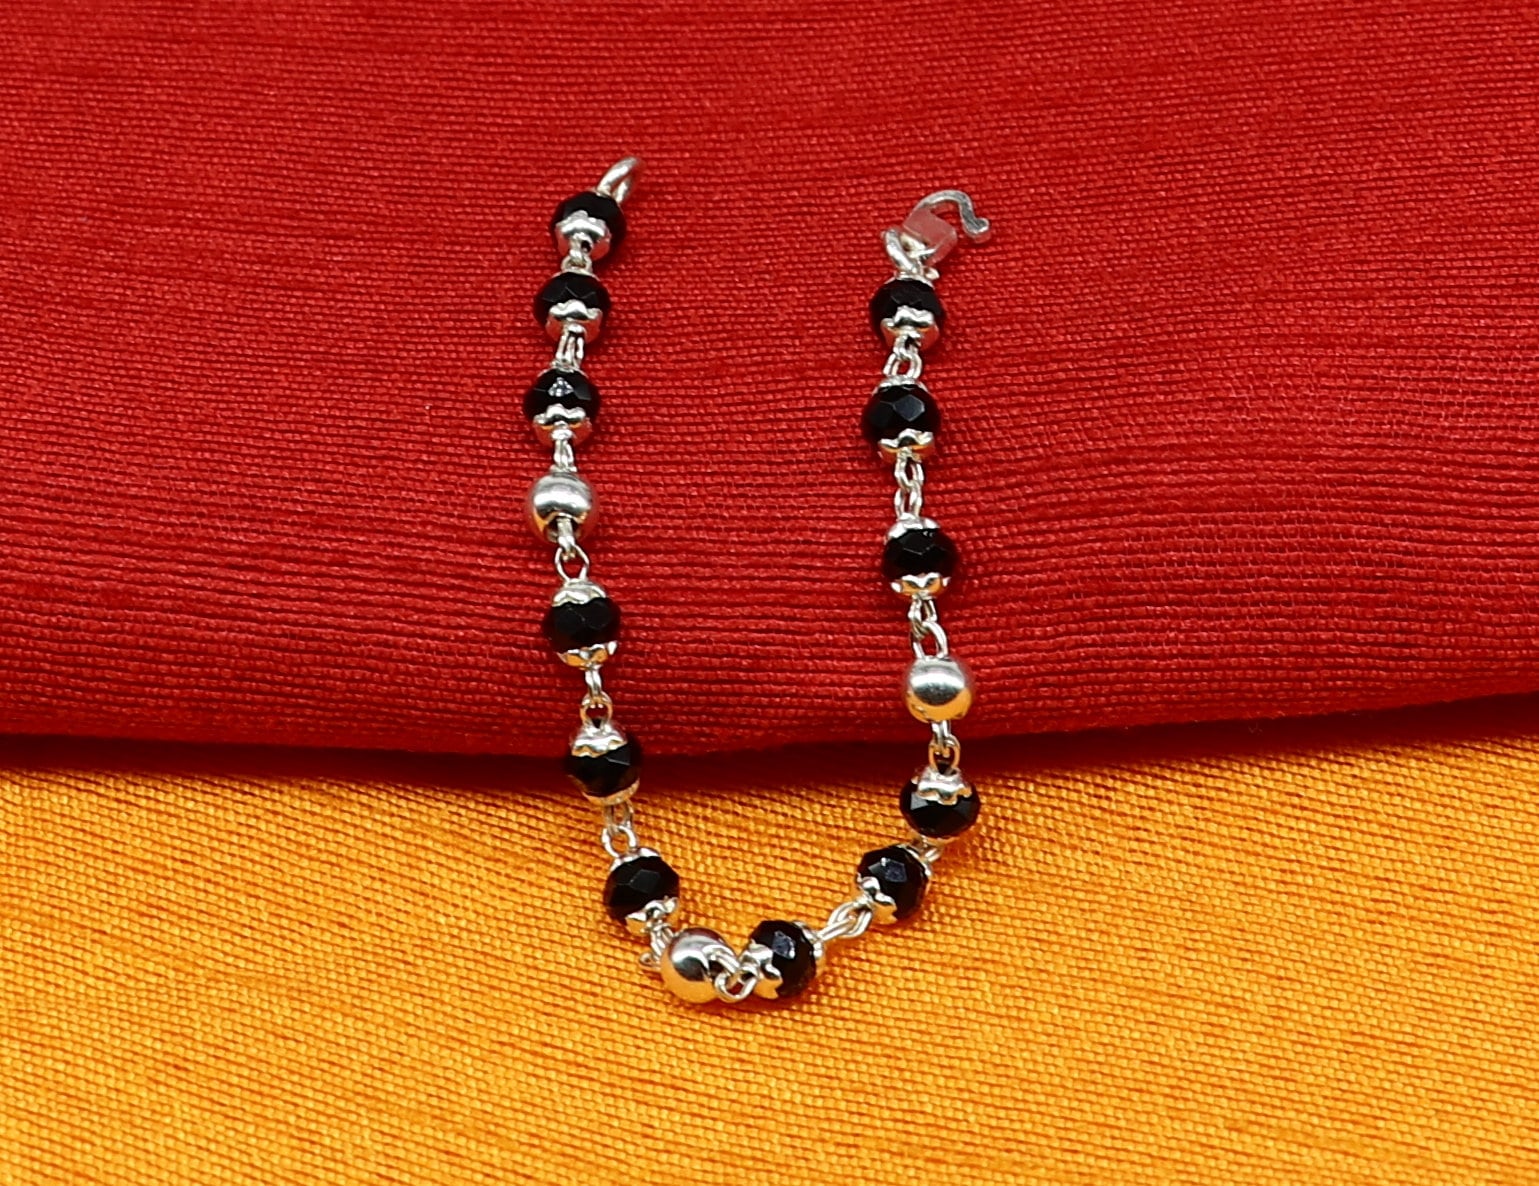 925 sterling silver customized black beads Nazariya bracelet, protect from evil eyes, new born baby bracelet stylish jewelry from india bbr9 - TRIBAL ORNAMENTS